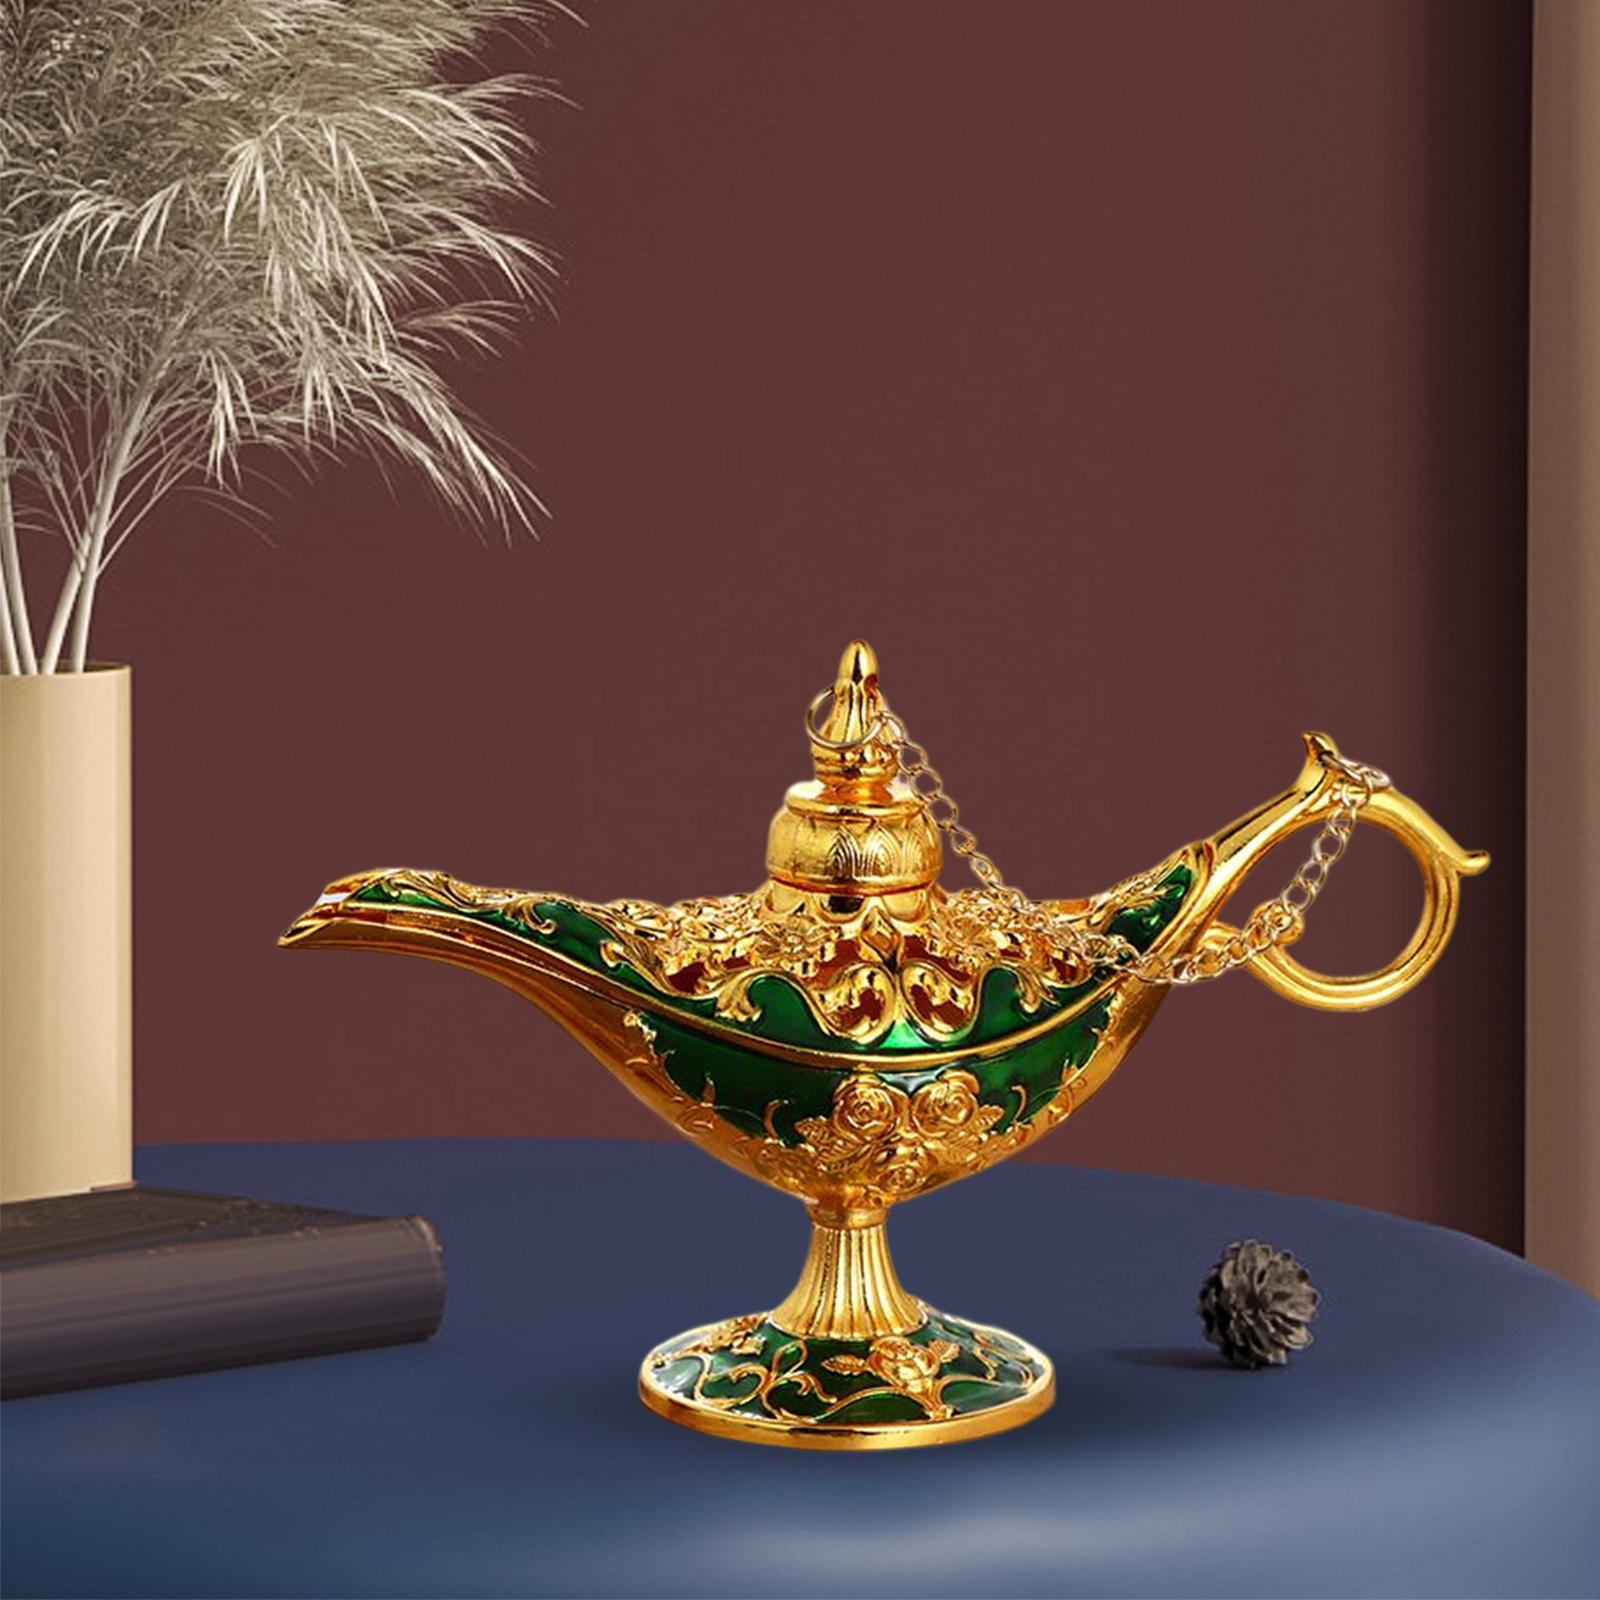 Statue Genie Lamp Washing Light Wedding Oil Lamp Metal Collection Decor Green